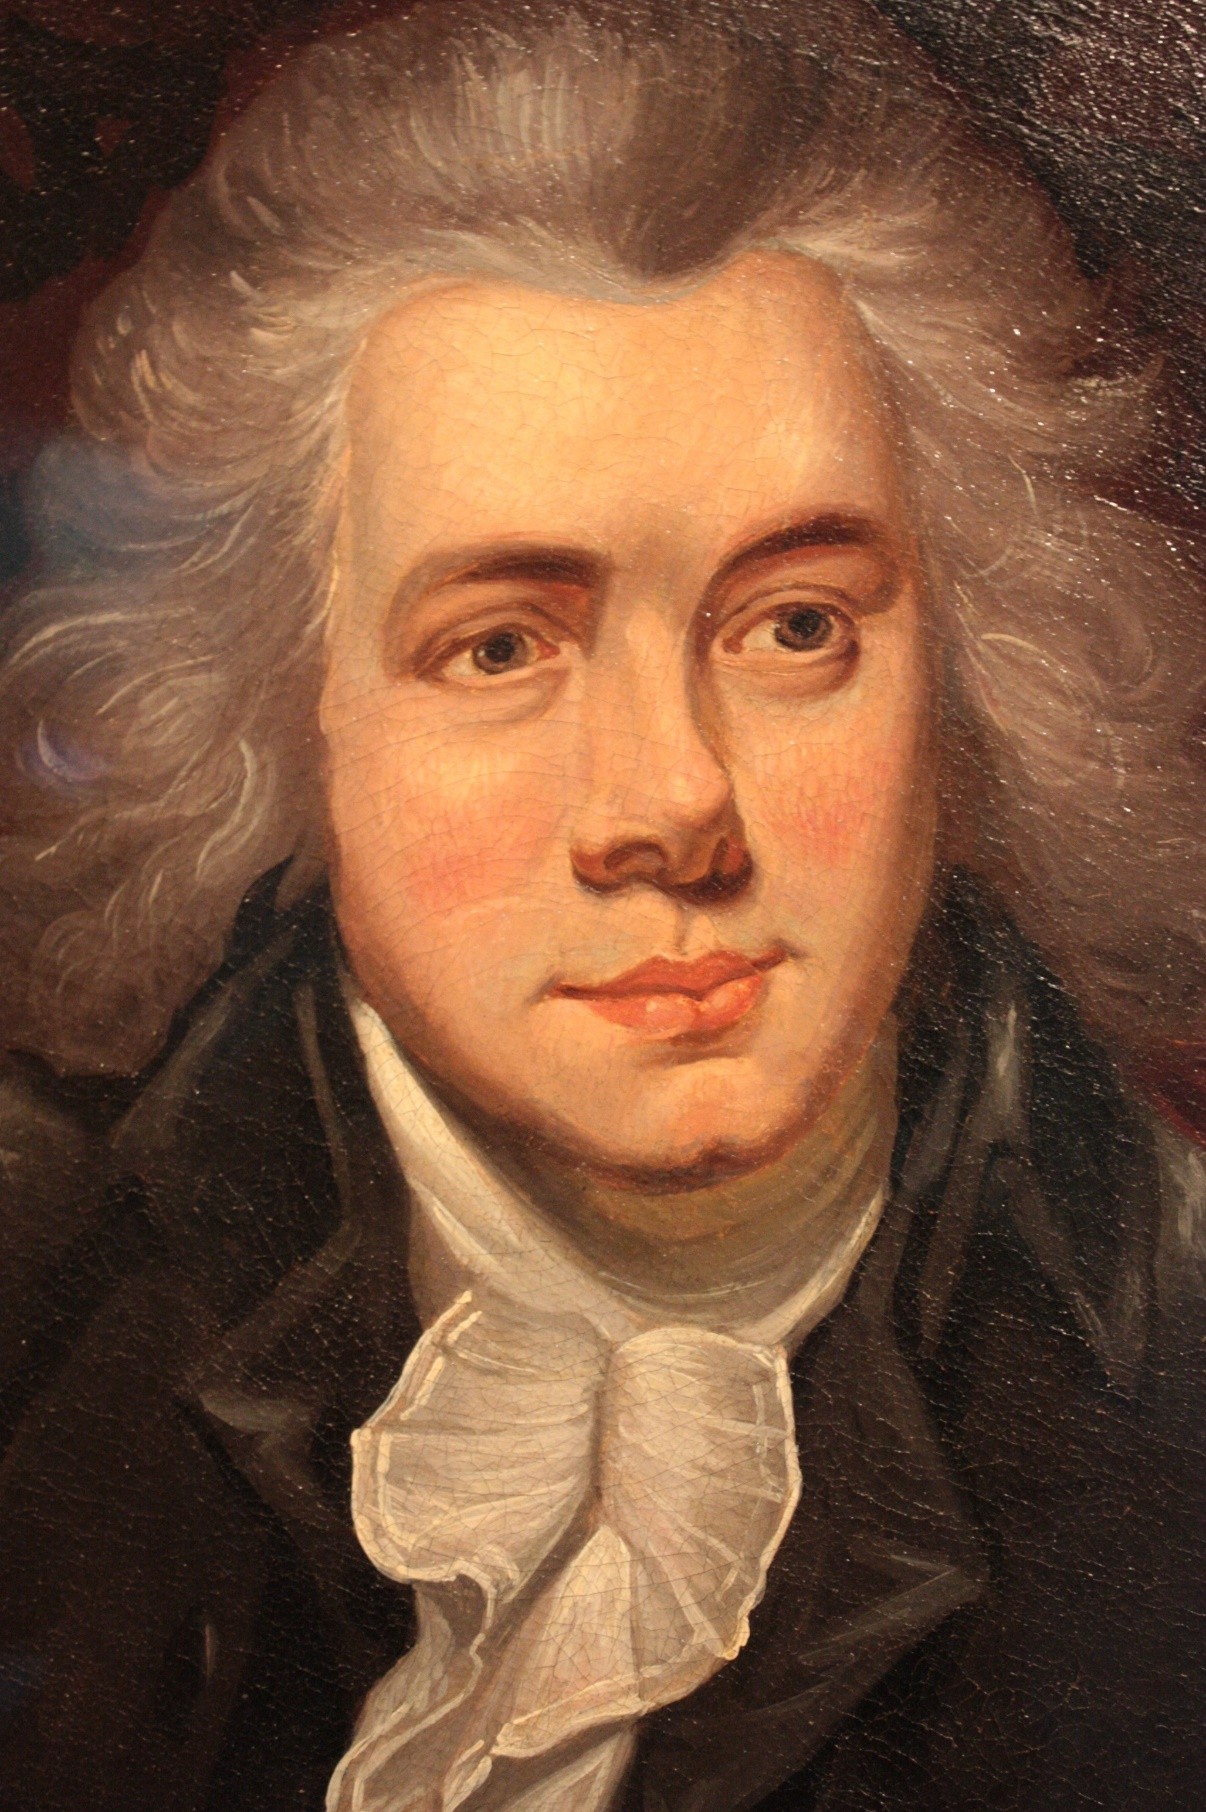 Photo Credit: https://upload.wikimedia.org/wikipedia/commons/2/2f/William_Wilberforce_c.1790_(after_John_Rising).JPG